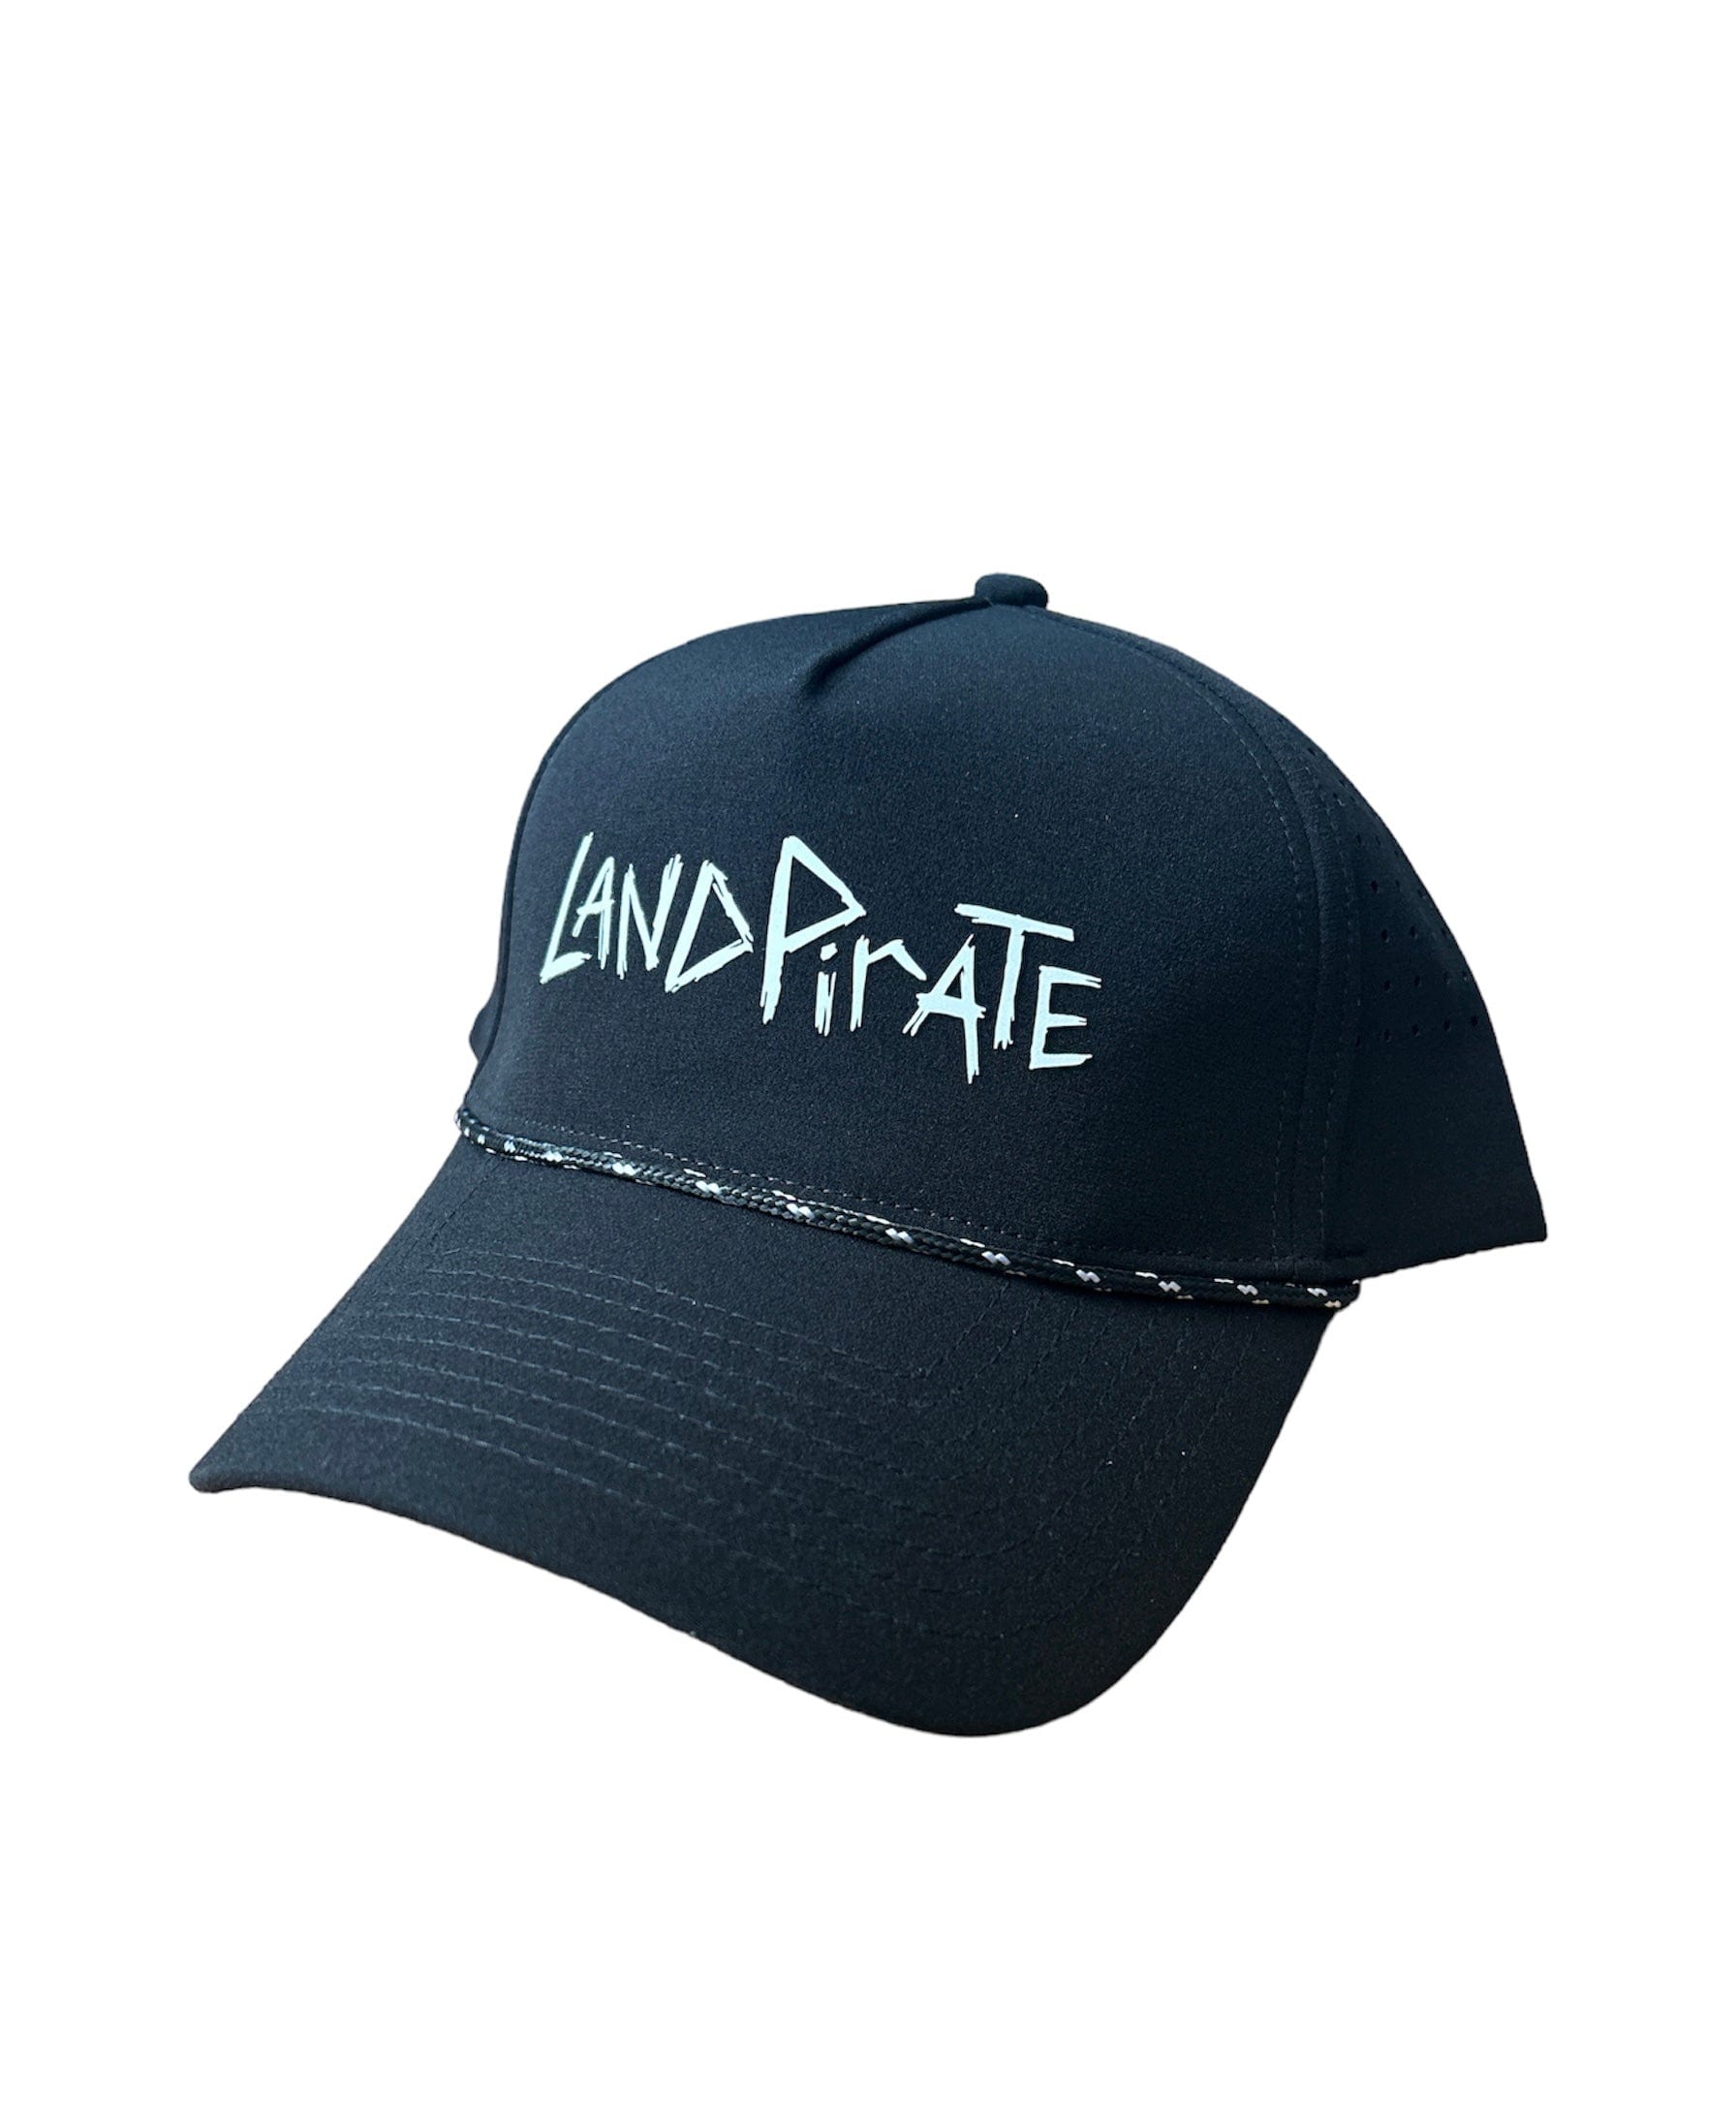 Land Pirate Headwear Black / OSFM the 'Shoreline'